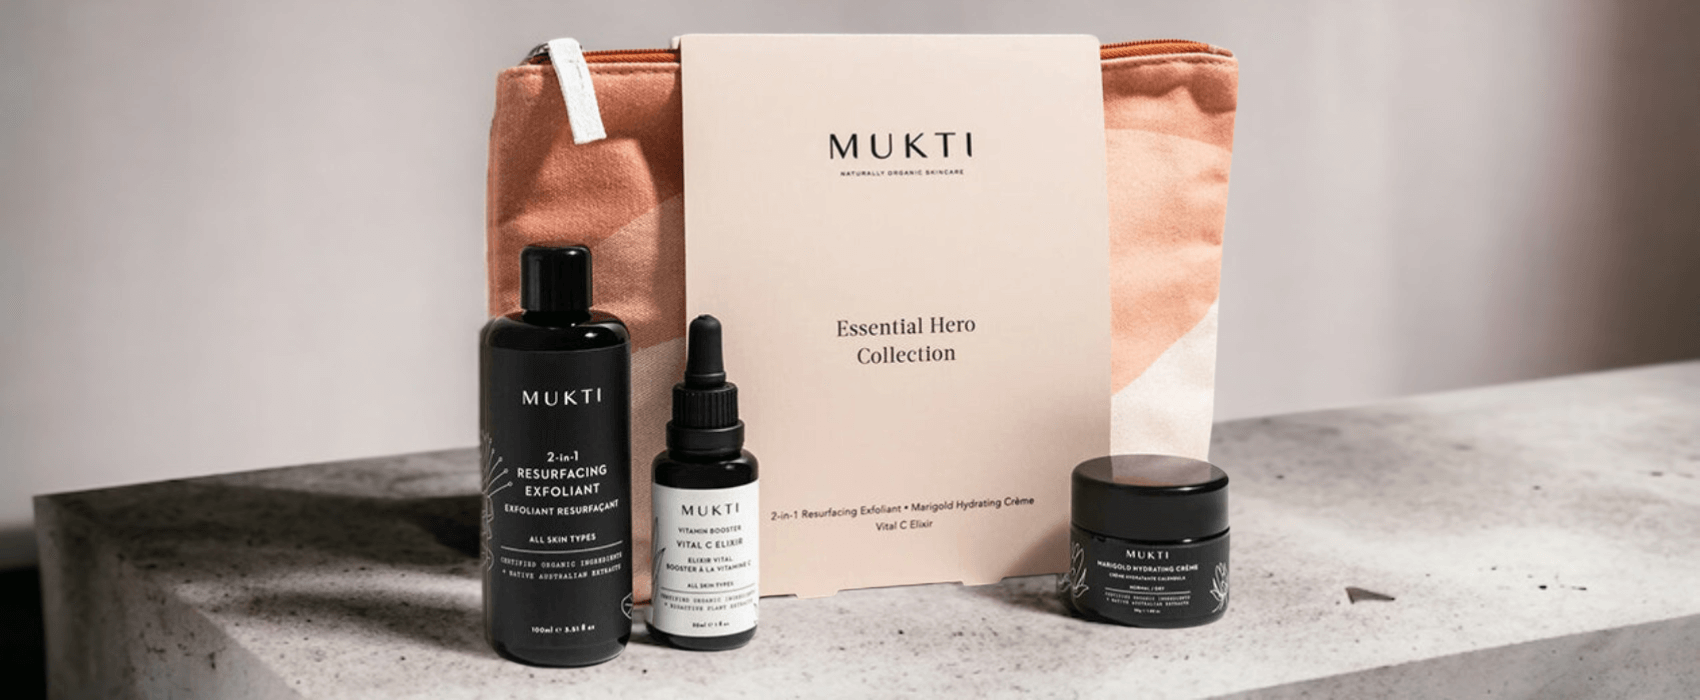 Blog - The rise of Mukti Organics